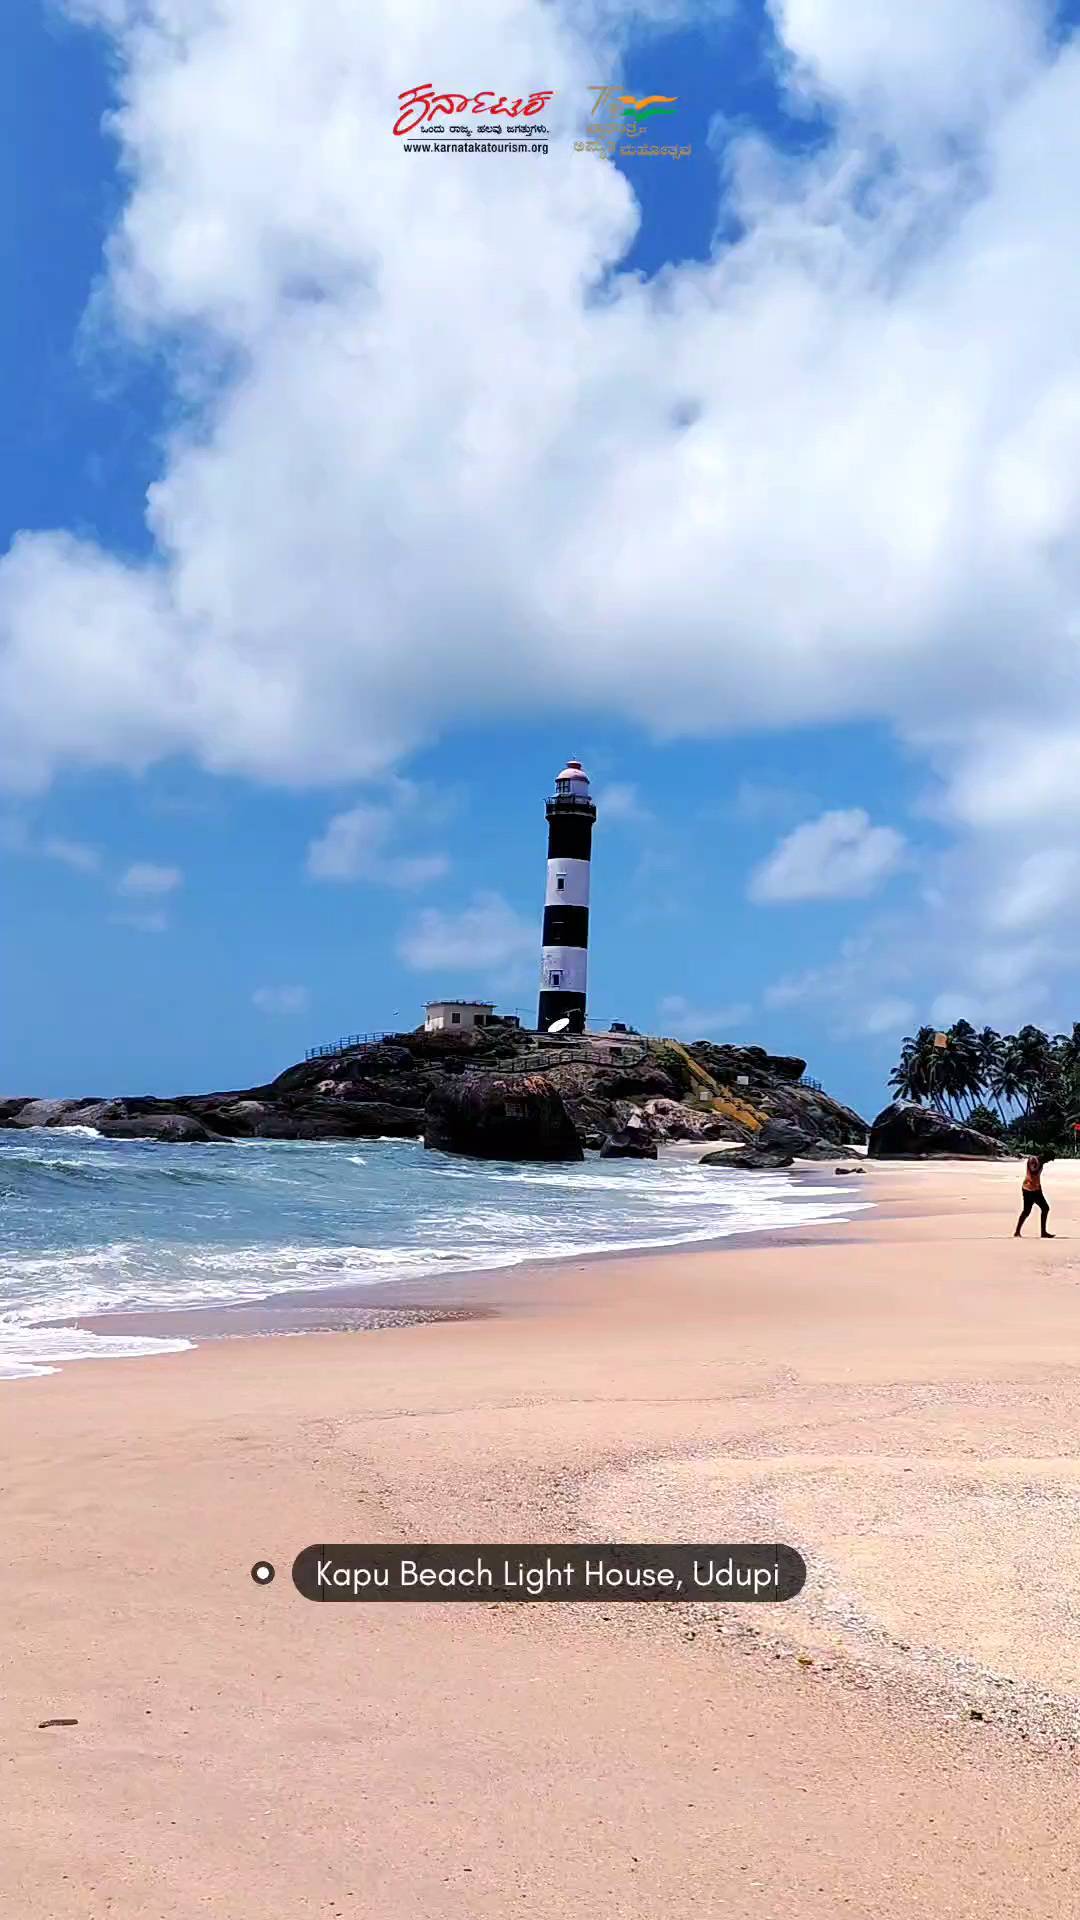 Kapu Beach

Standing on the 130-foot long kapu beach lighthouse, the lush greenery, sandy beaches, and panoramic view of the Arabian Sea looks like a paradise.
 
VC : @urstrulymadhu_rms

Location : Kapu Beach, Udupi (D).
https://goo.gl/maps/mndZ8xHv8Aty4BuR6

To know more info : https://www.karnatakatourism.org/tour-item/kapu-beach/

#exploremadu #NammaKarnataka
#Tourism #KarnatakaDiaries #TravelKarnataka #Travel #traveldiaries #travelgram #explorekarnataka #travelinspo #vibrant #colours #travelvibes #vacationvibes #onestatemanyworlds #visitkarnataka #karnatakabeach #beachesofkarnataka #kapubeach #visitkarnataka #udupi #visitudupi #lighthouse